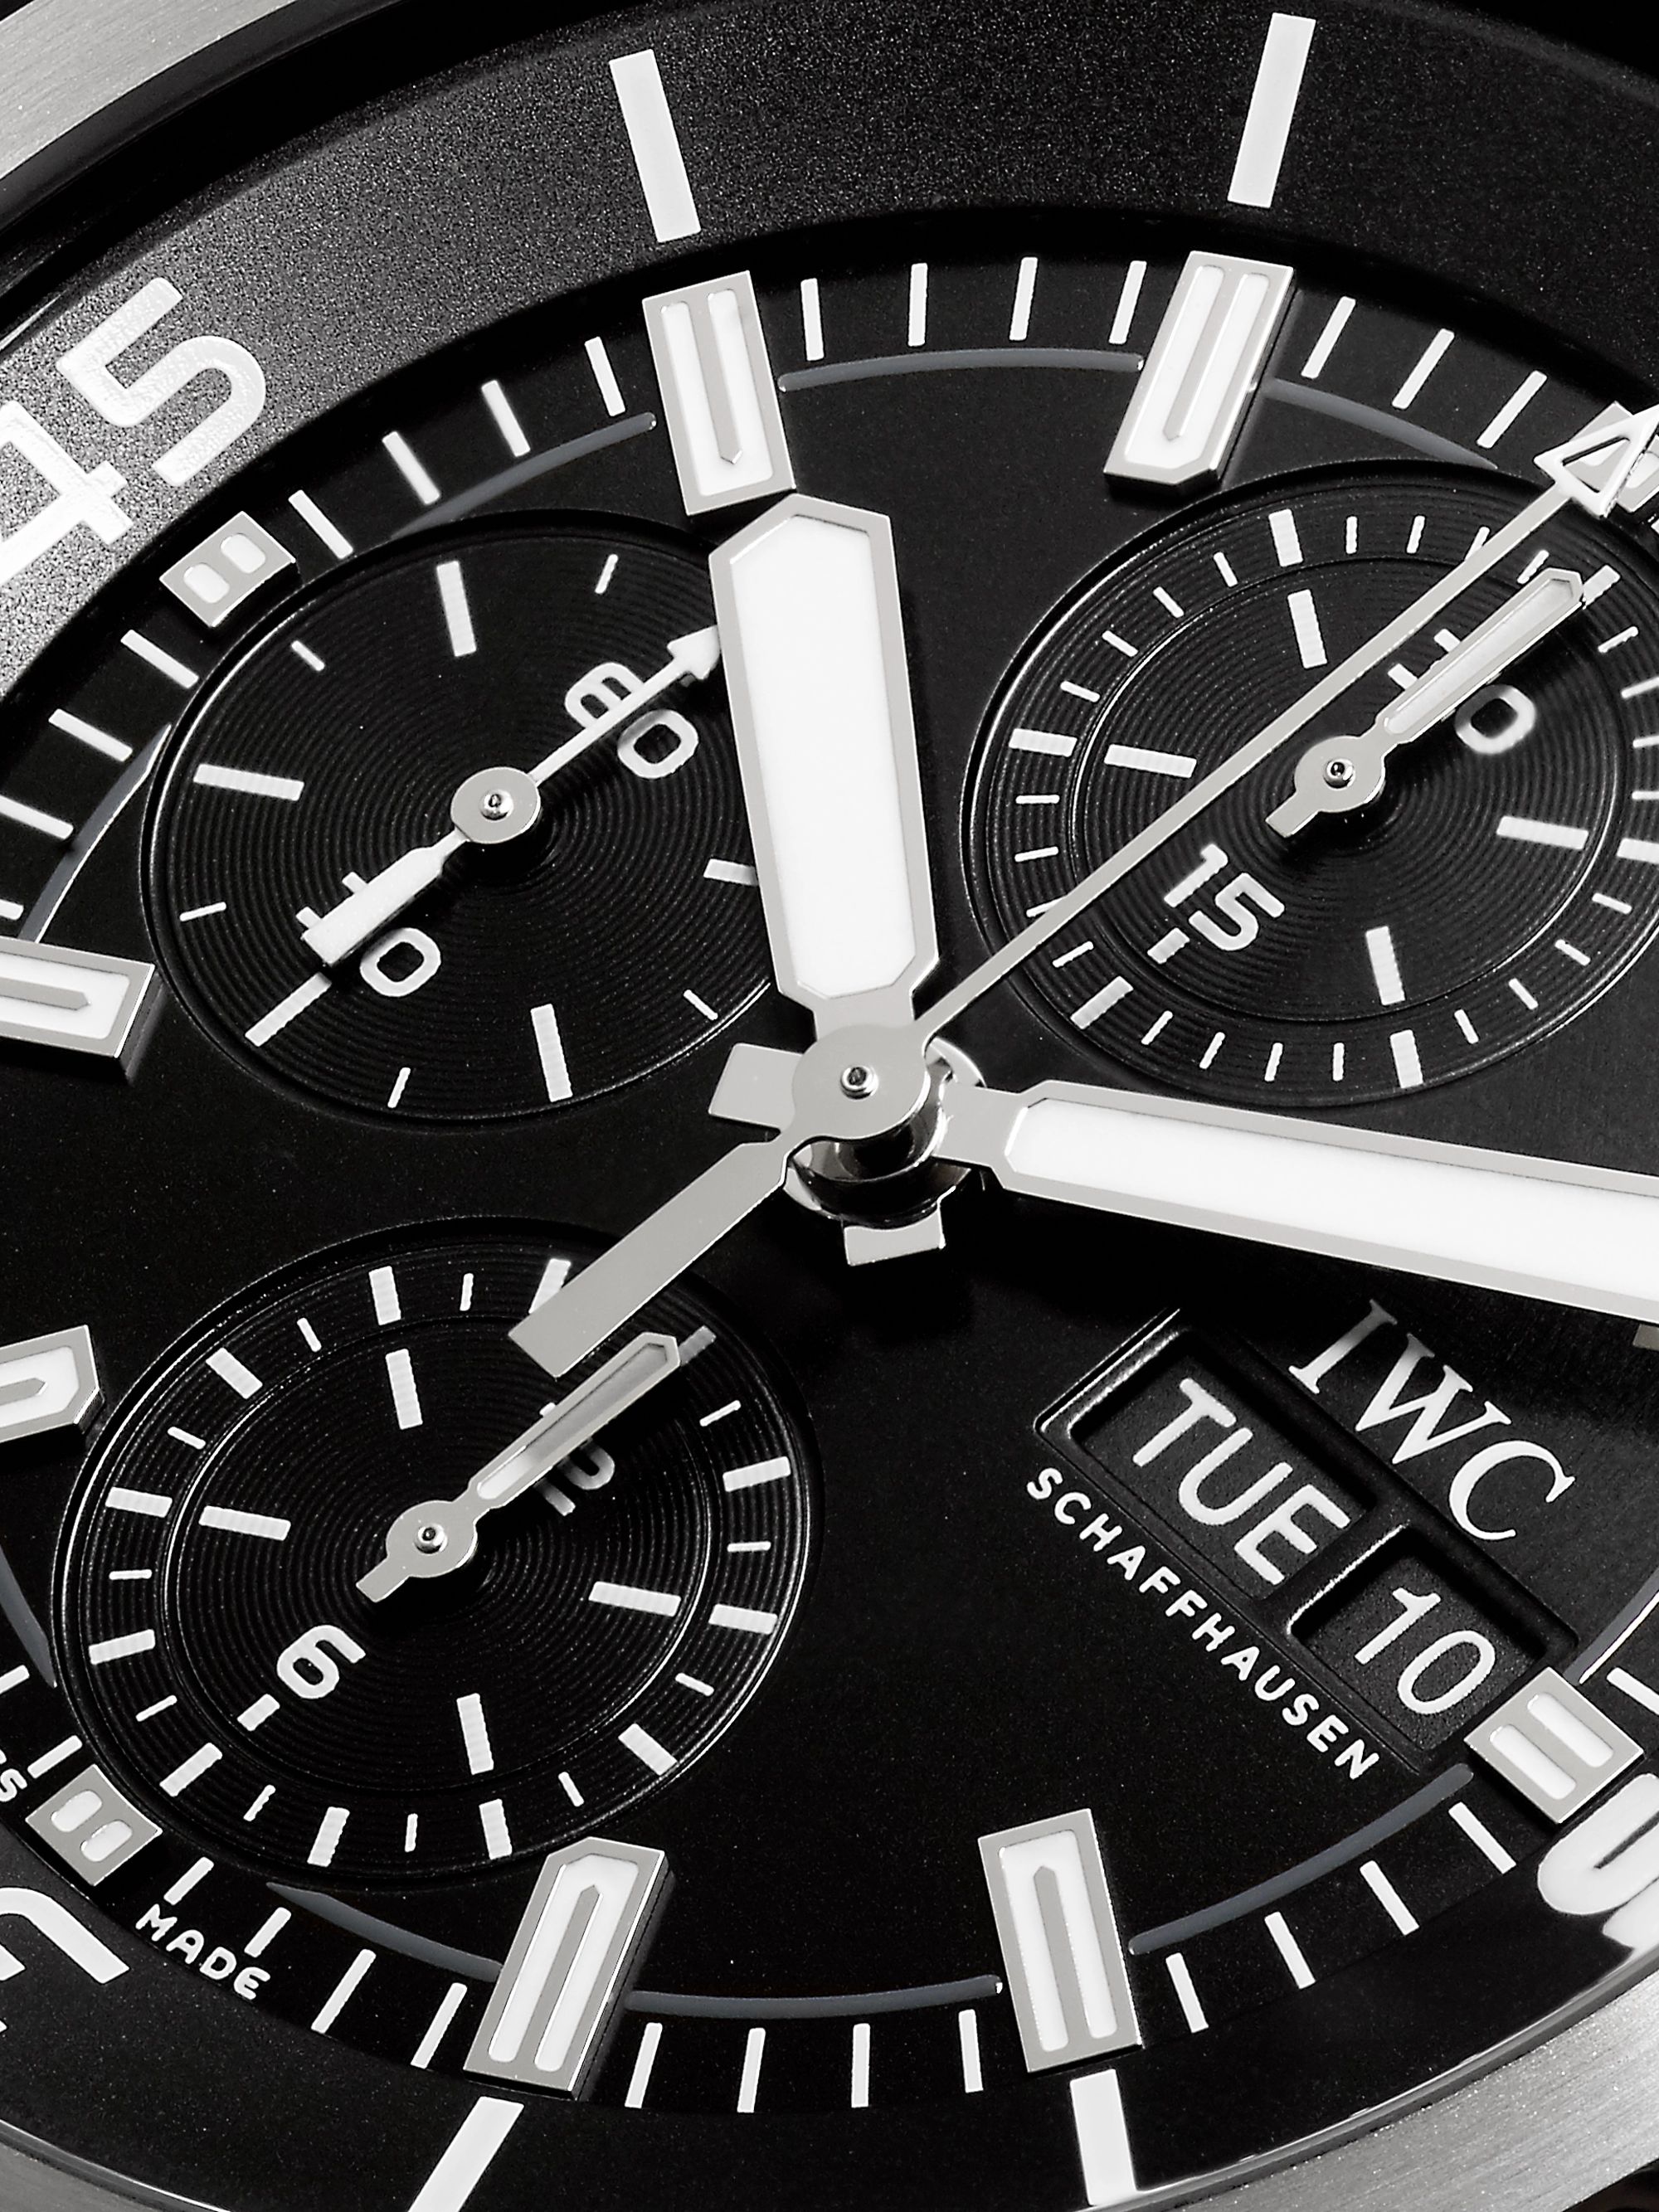 IWC SCHAFFHAUSEN Aquatimer Automatic Chronograph 44mm Stainless Steel Watch, Ref. No. IW376804